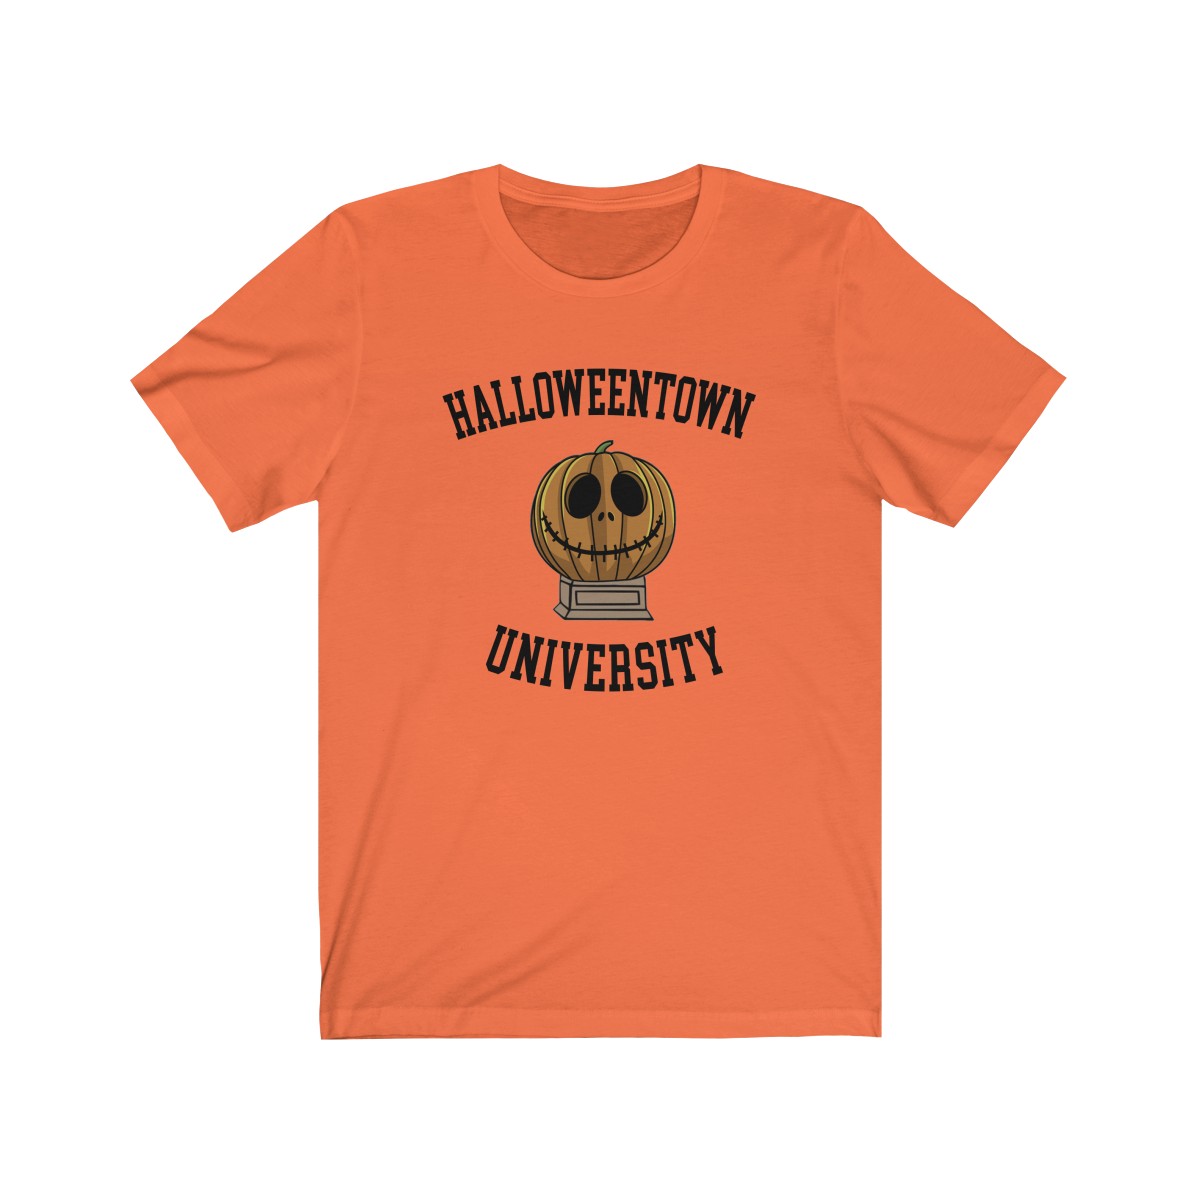 Halloweentown University Unisex T-Shirt, Sweatshirt, Hoodie